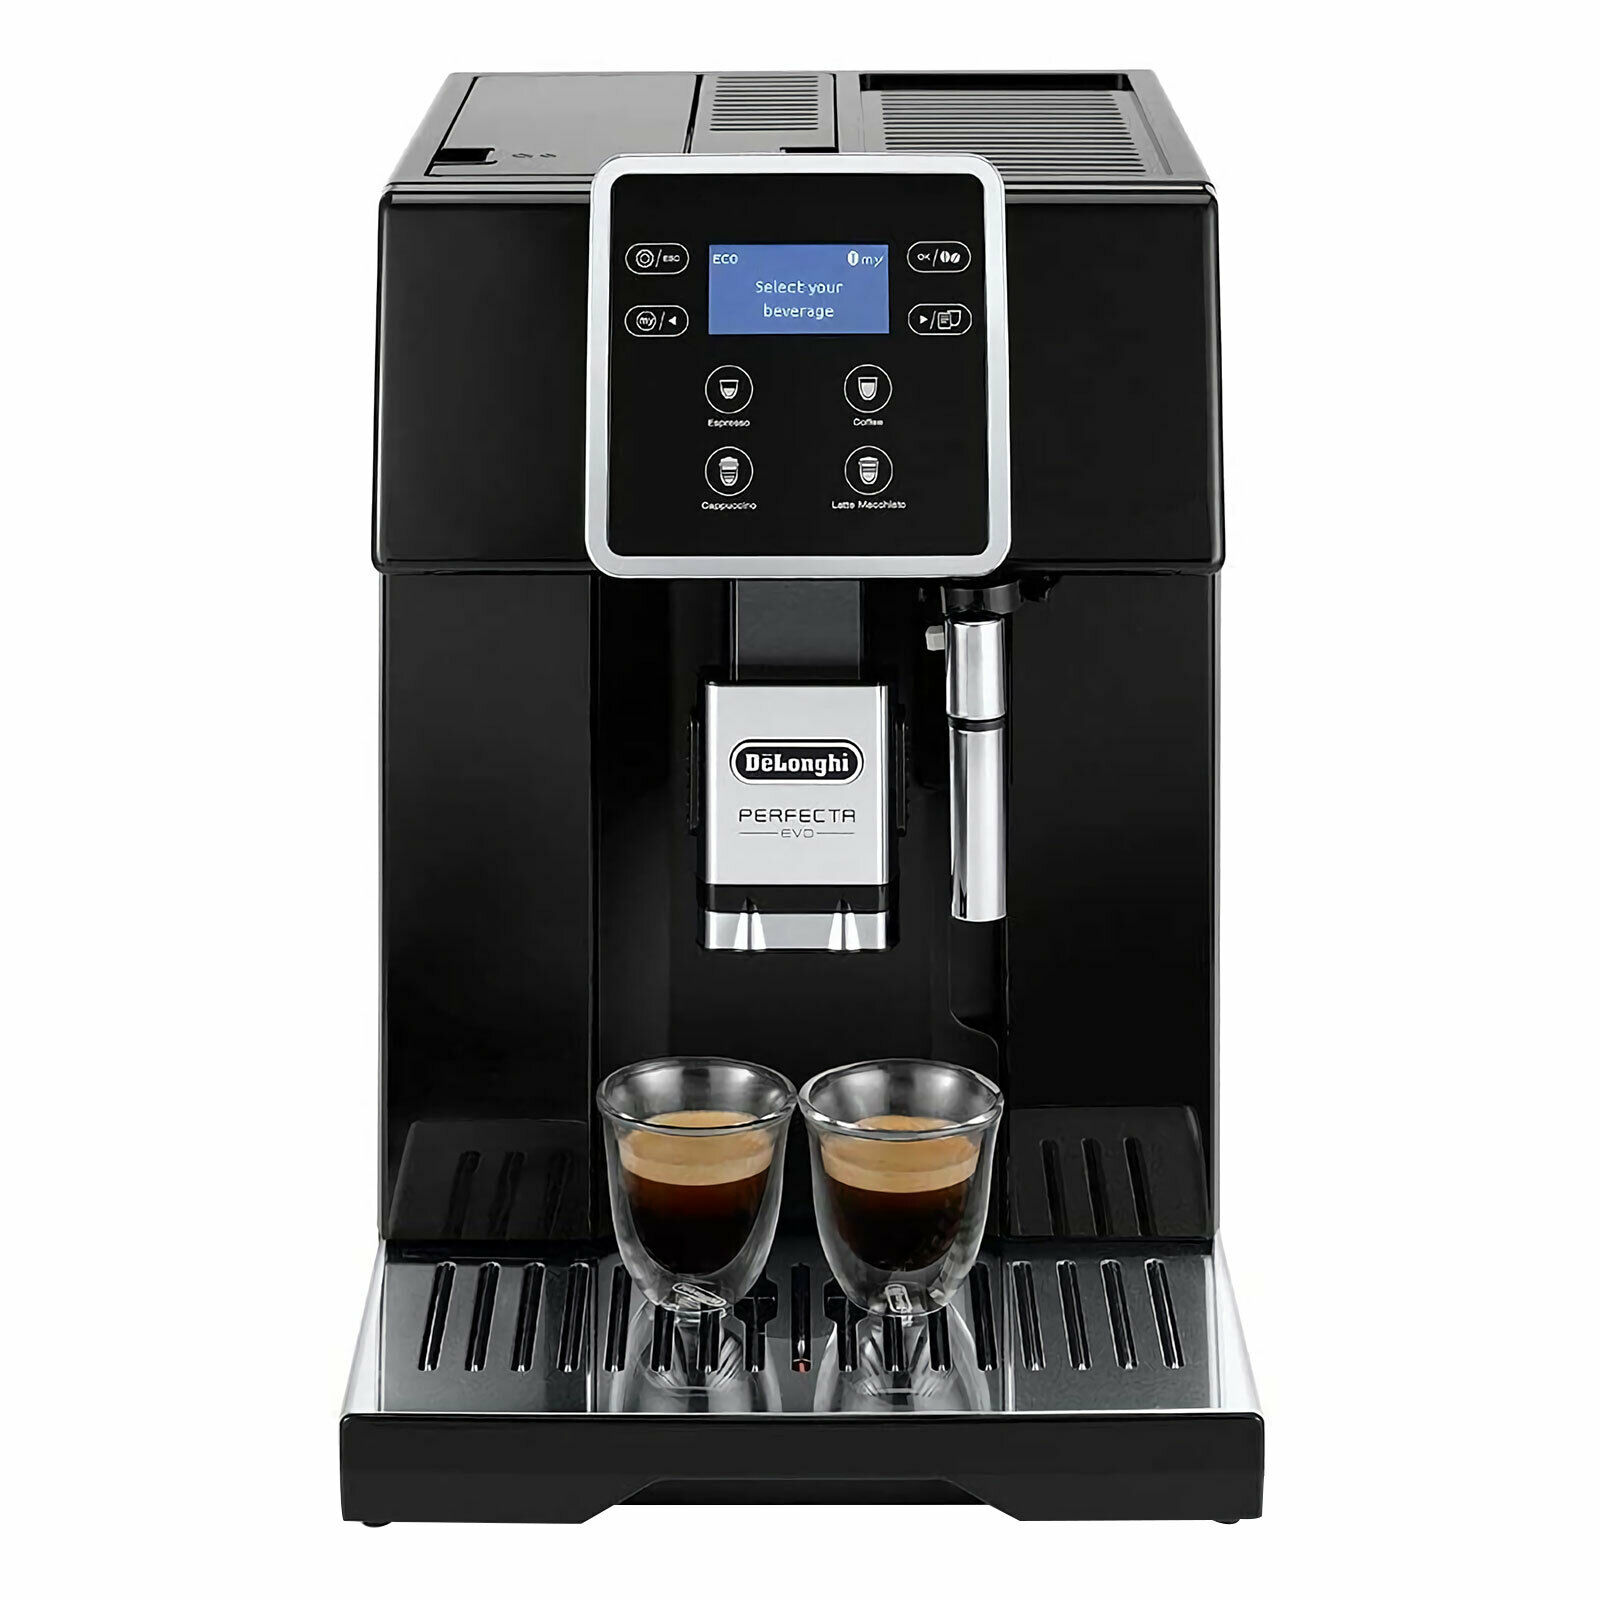 Bild zu [Refurbished] Kaffeevollautomat DeLonghi ESAM 420.40.B Perfecta EVO für 399€ (Vergleich: 491,62€)